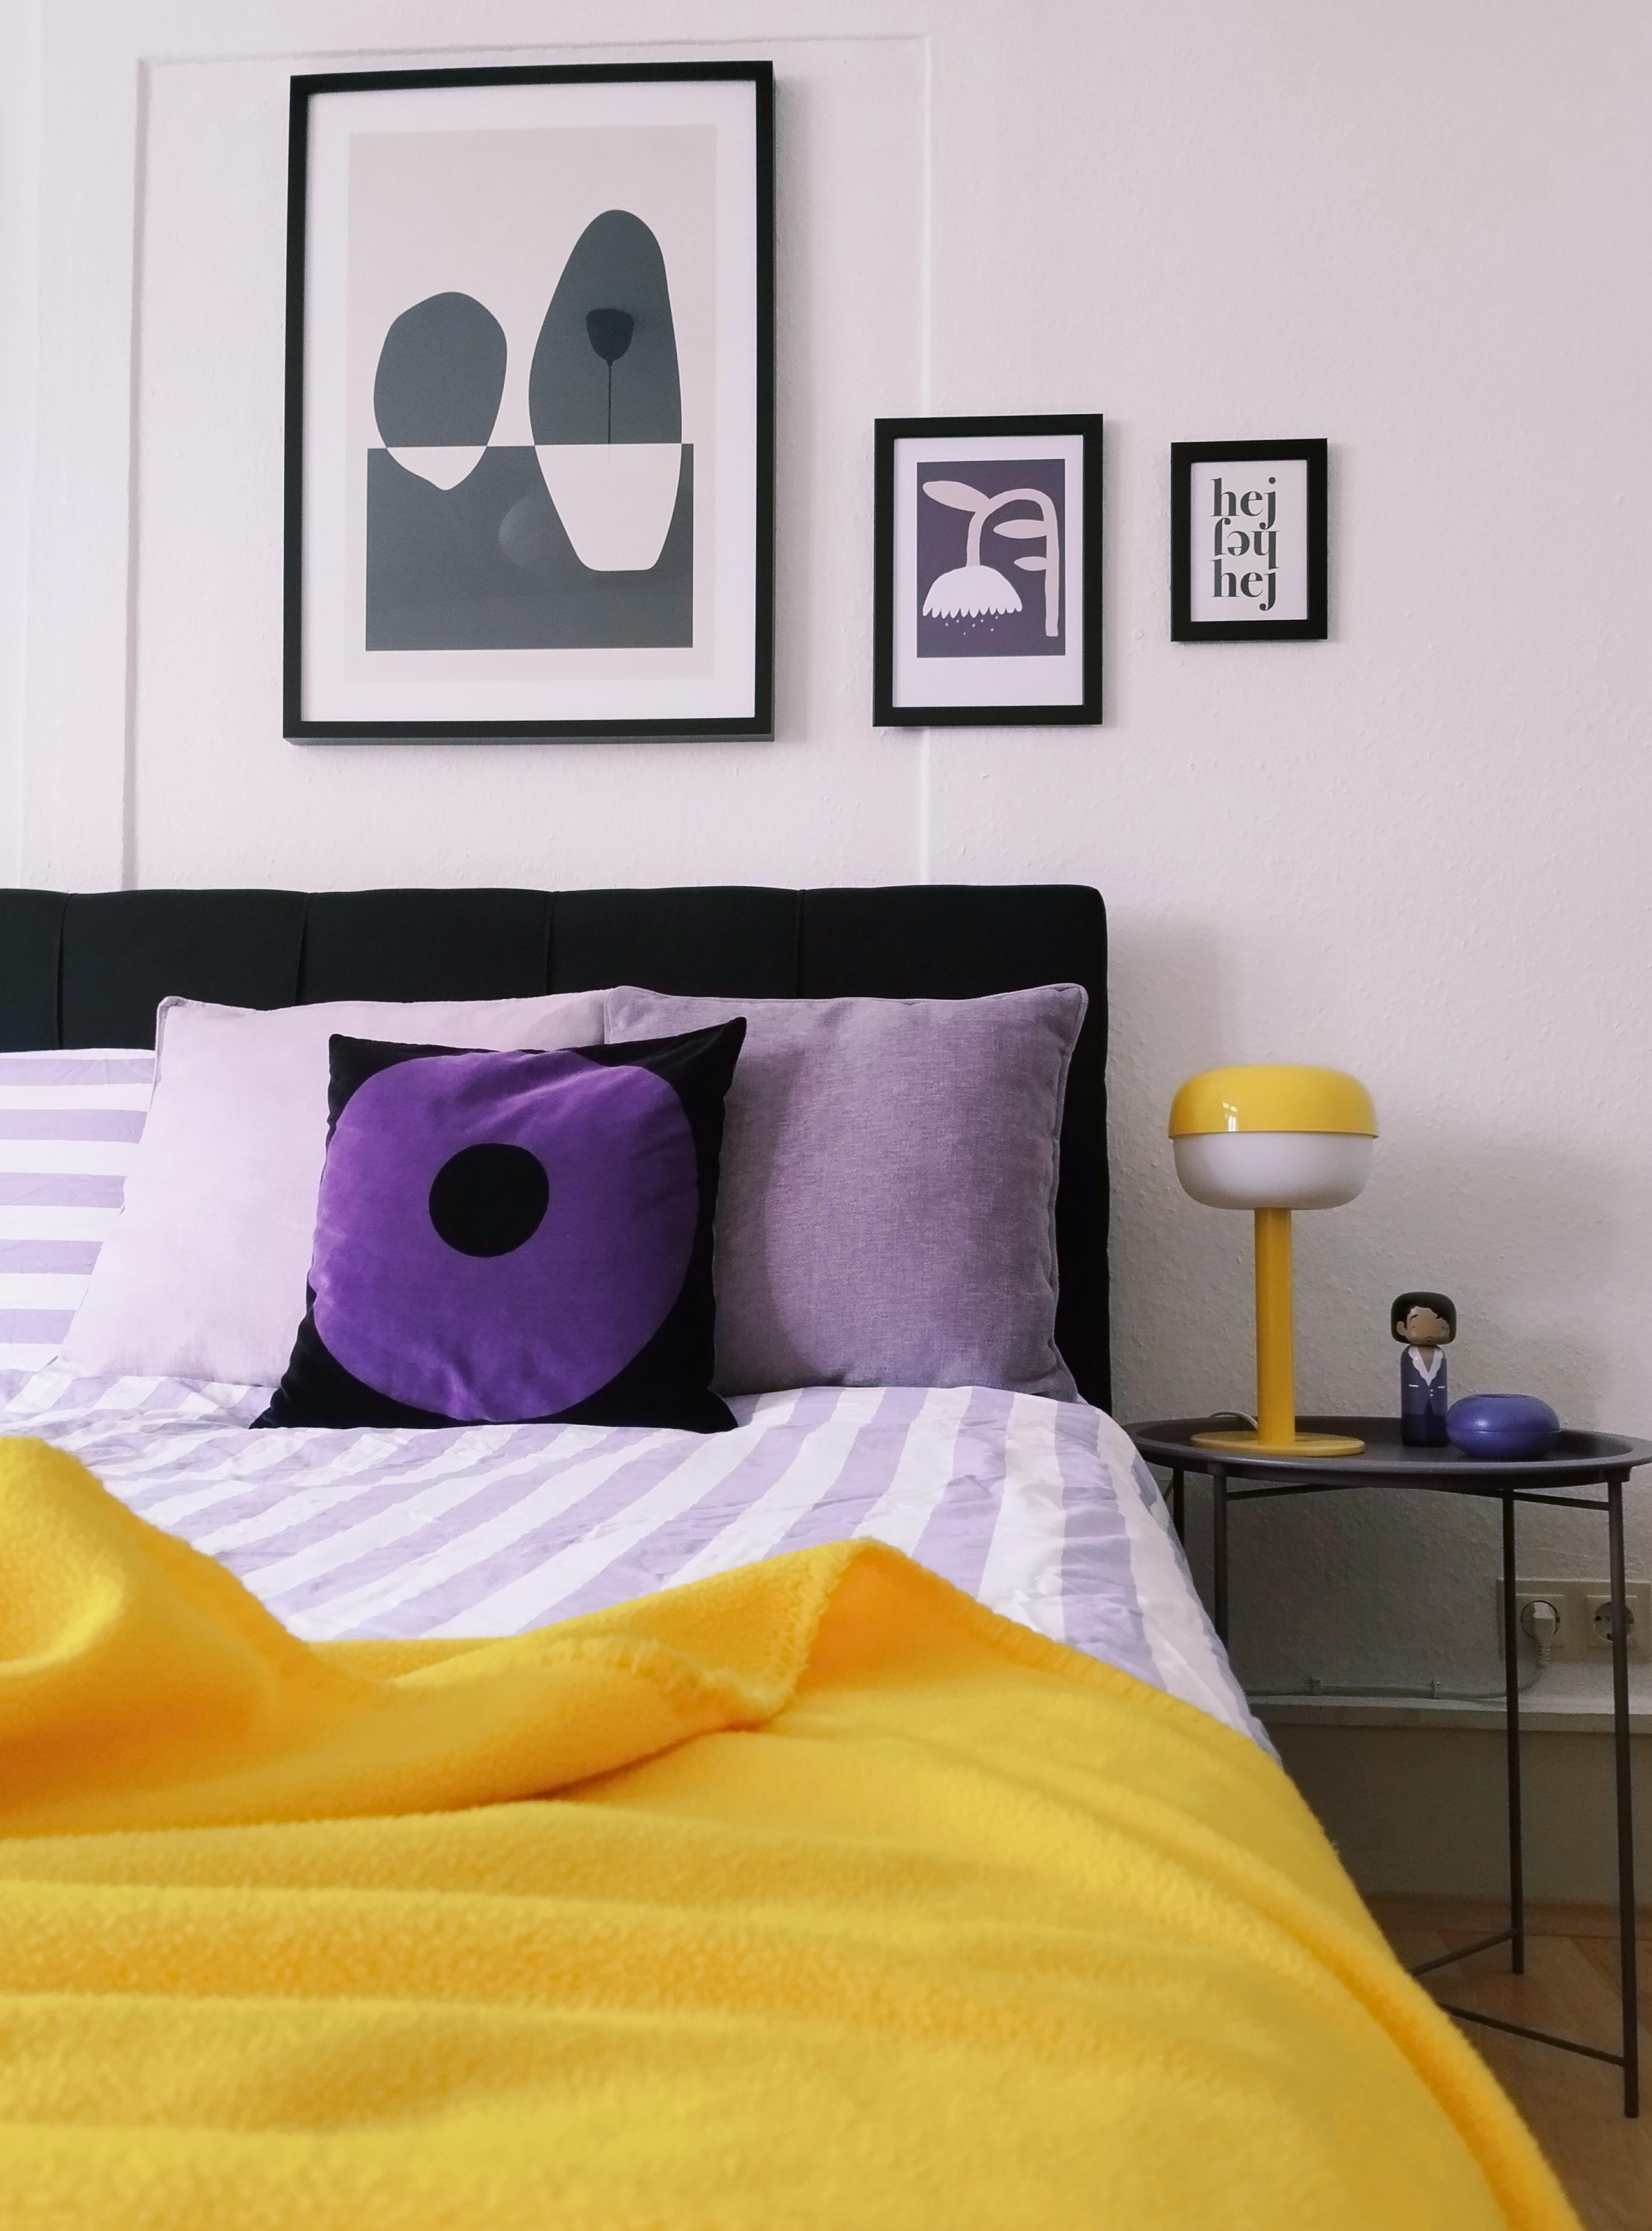 Kombiniere Lila mit Gelb haben sie gesagt....😉
#colourful #yellow #purpel #bedroom #colorpop #scandistyle 